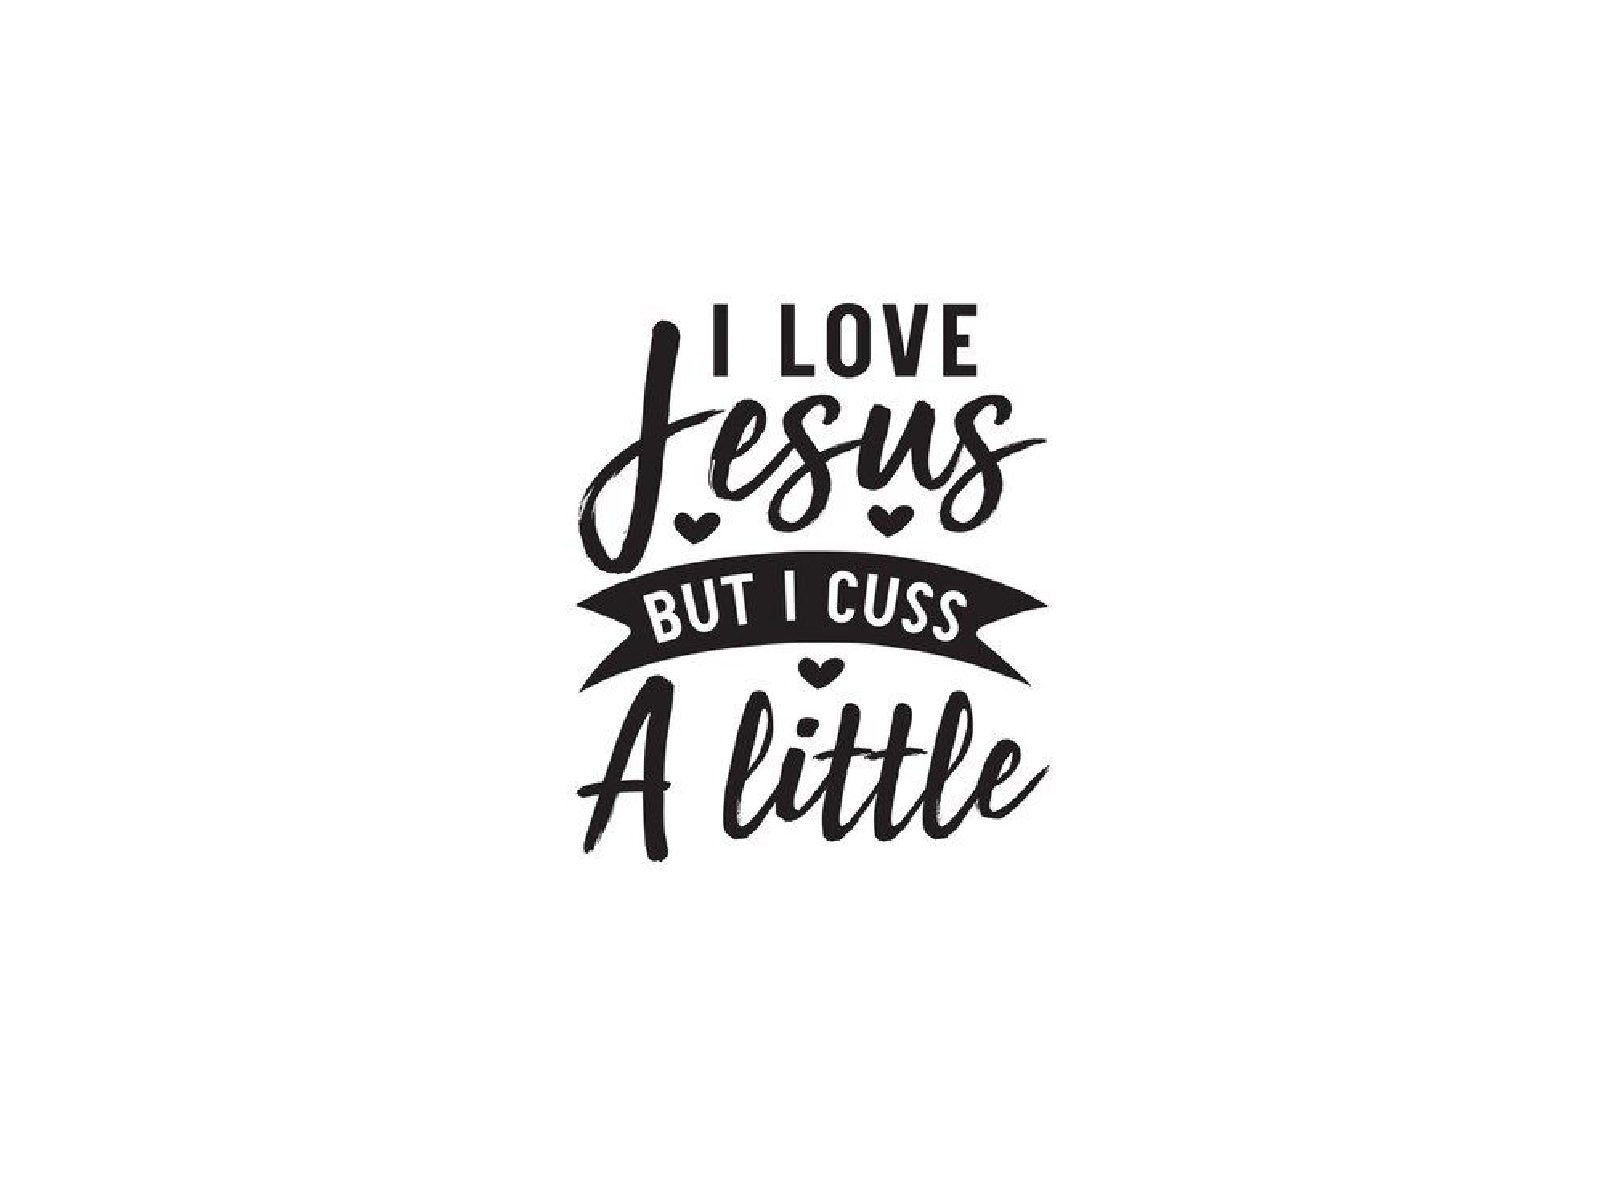 I love Jesus. But I cuss a little